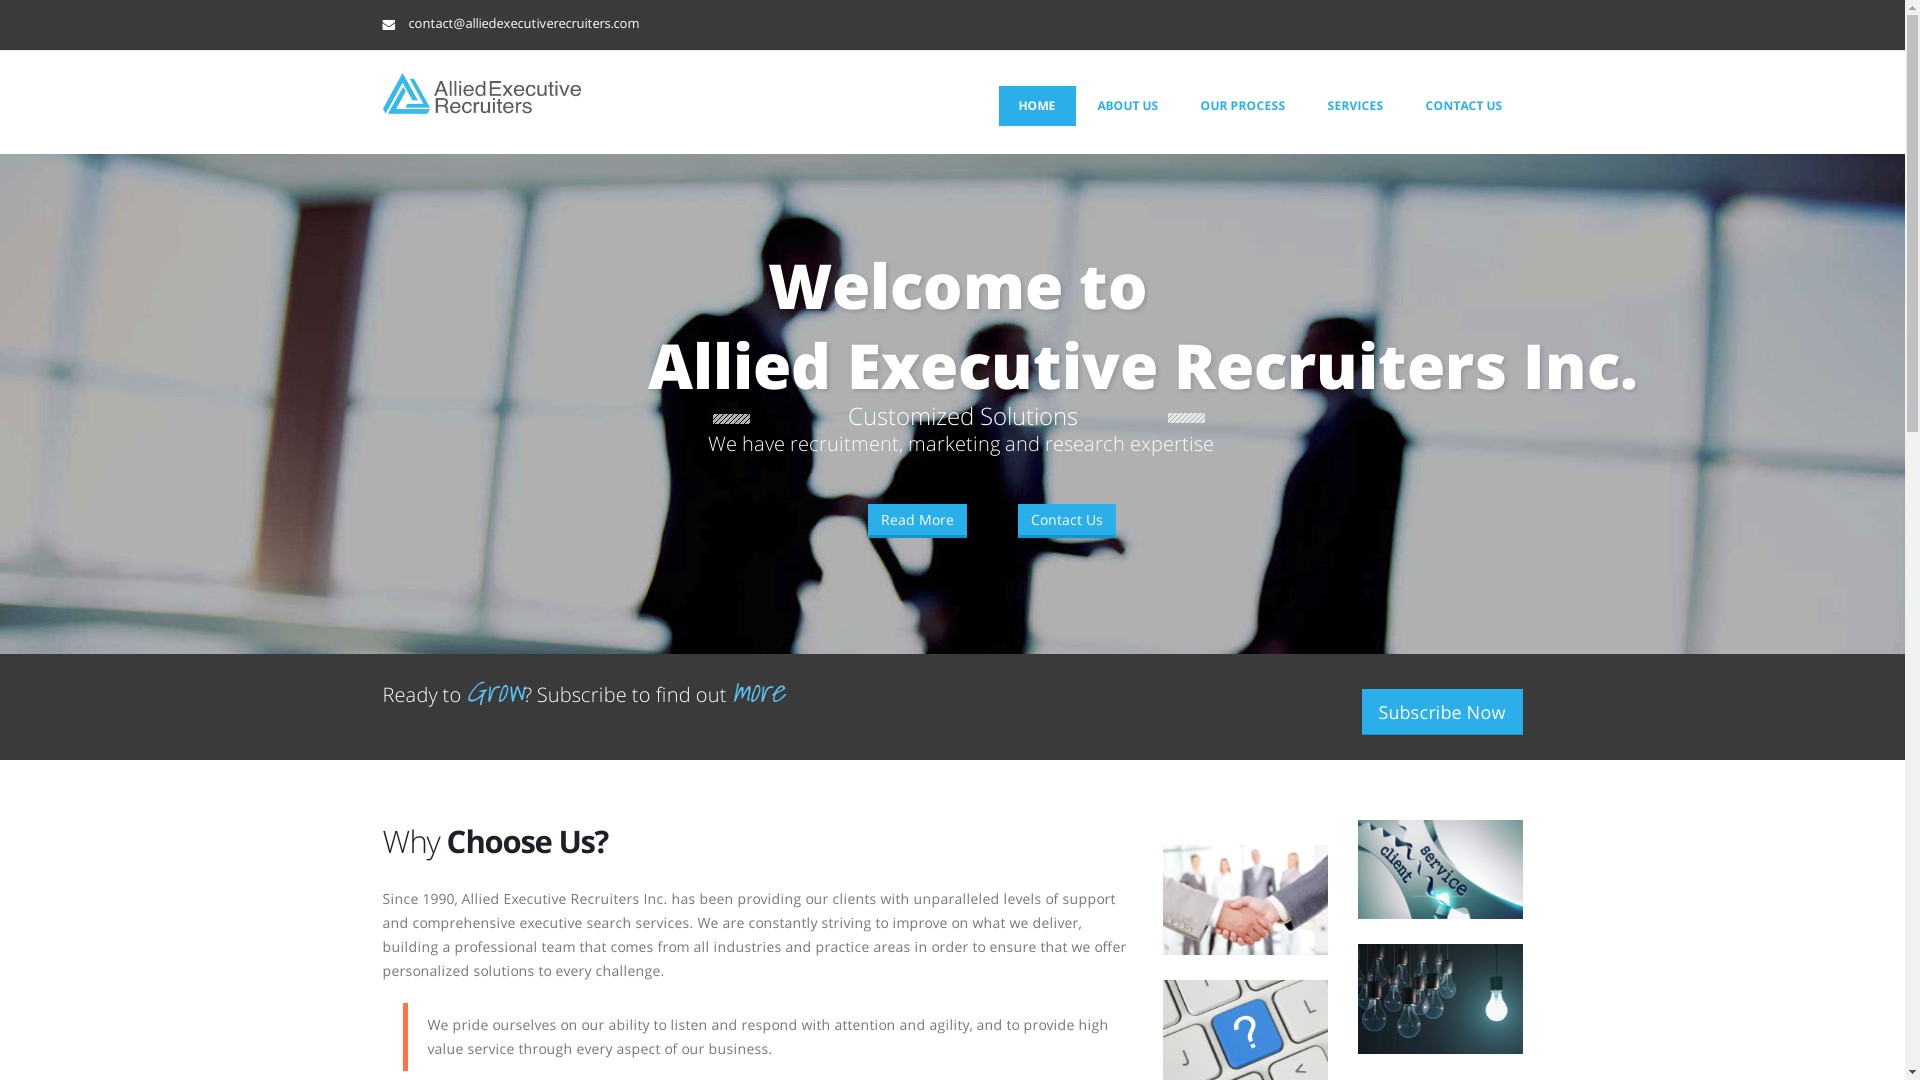 Allied Executive Recruiters at alliedexecutiverecruiters.com